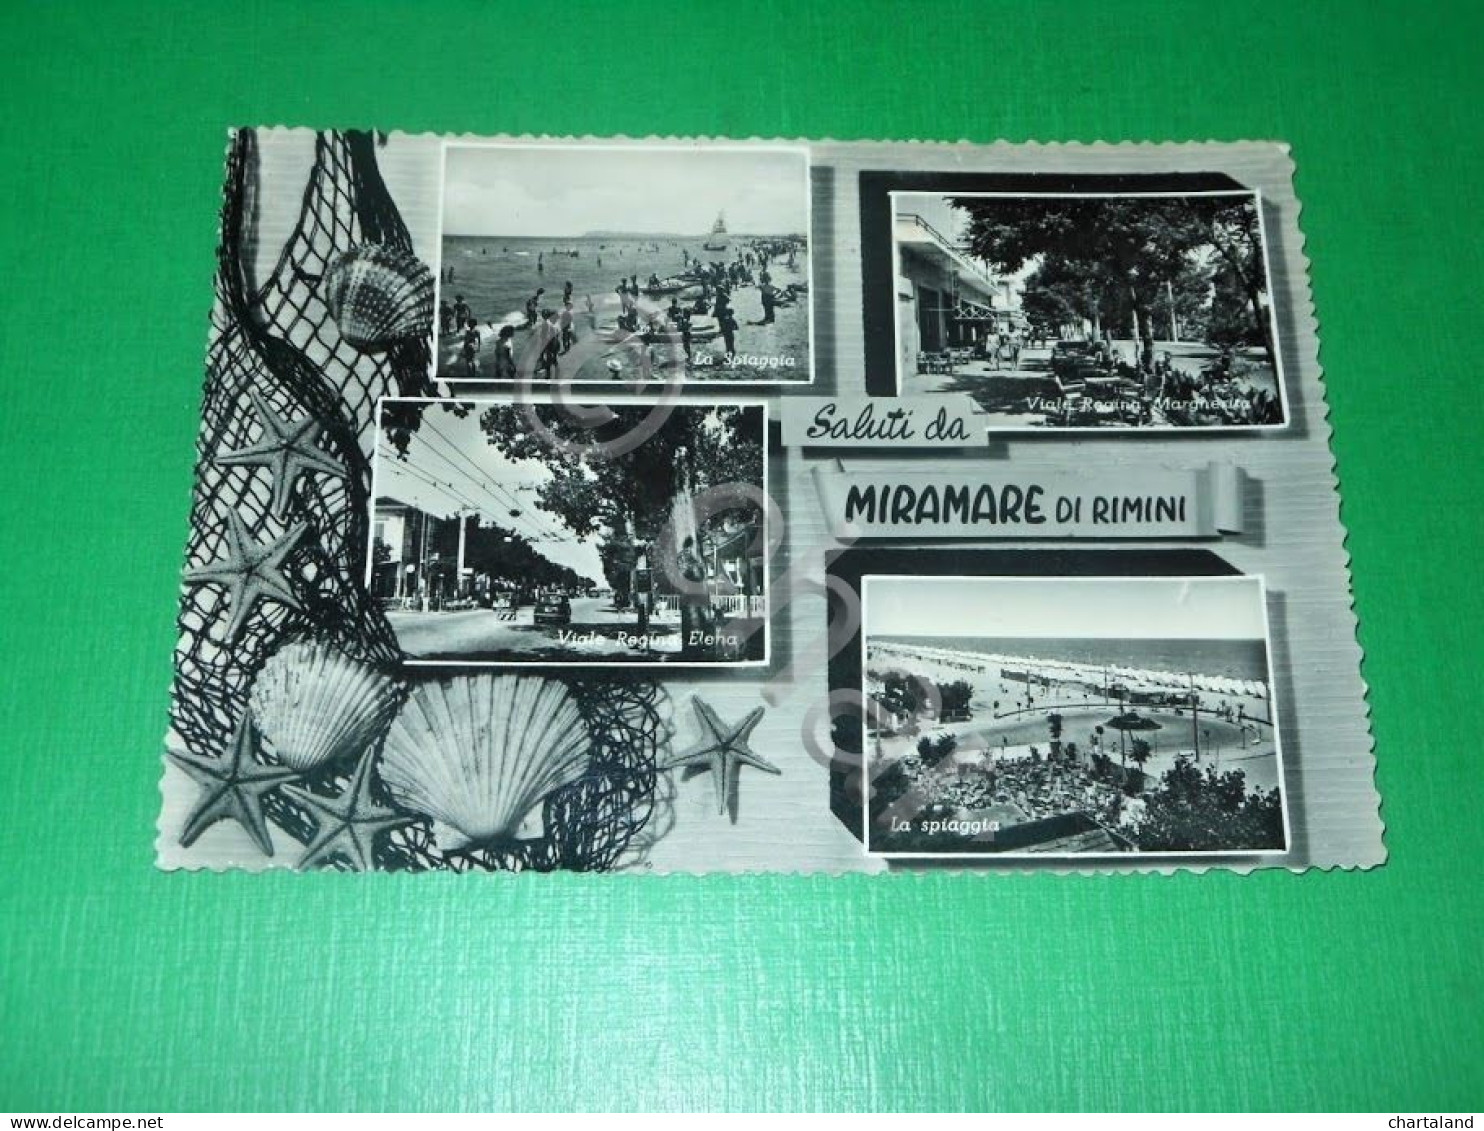 Cartolina Saluti Da Miramare Di Rimini - Vedute Diverse 1958 - Rimini